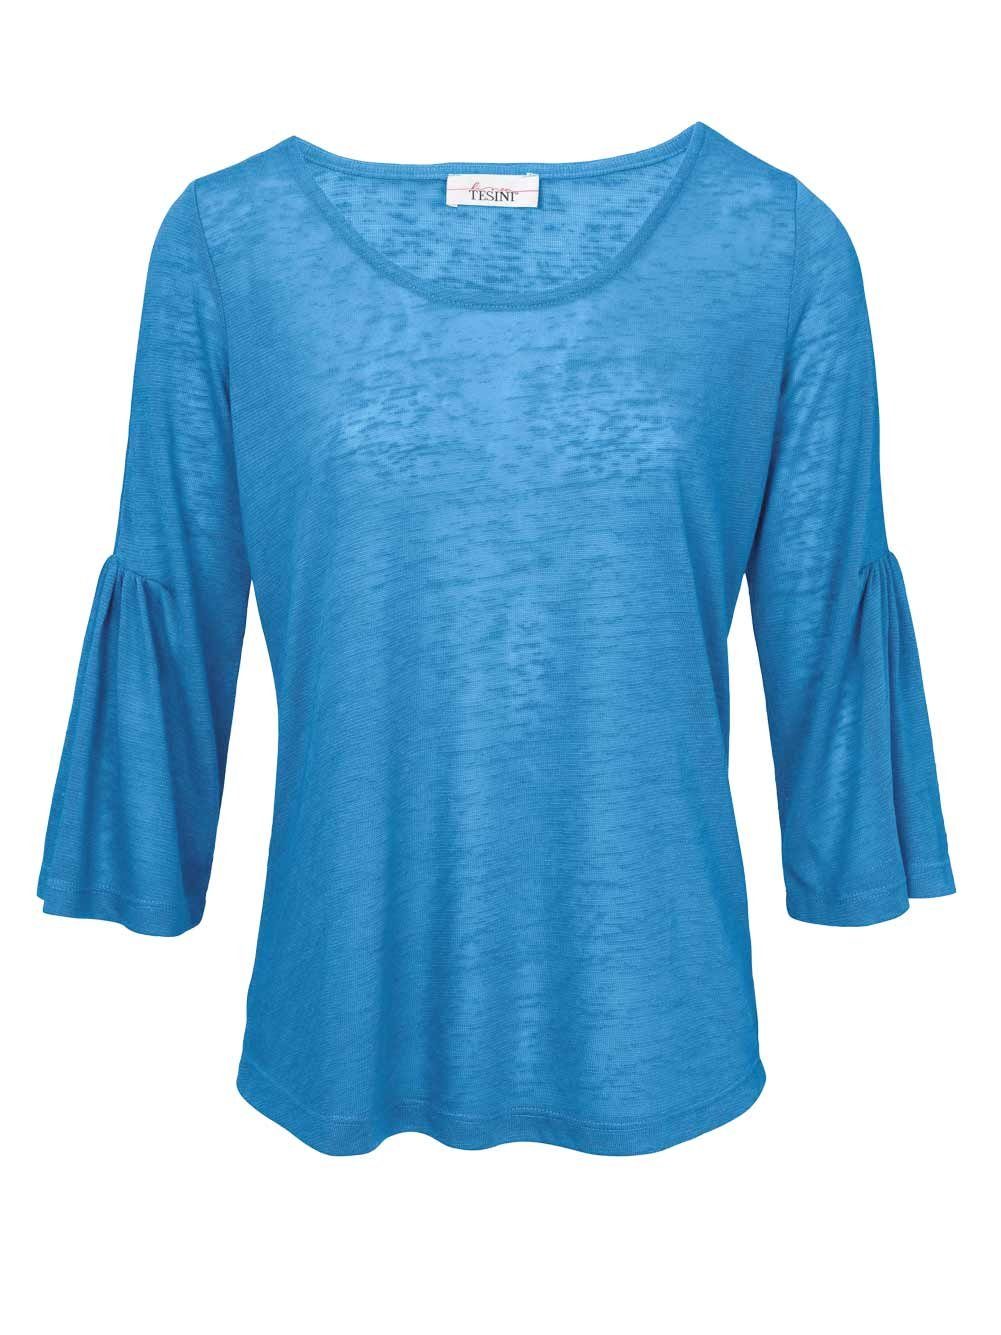 Damen Tesini Designer-Volantshirt, Longshirt heine blau Linea